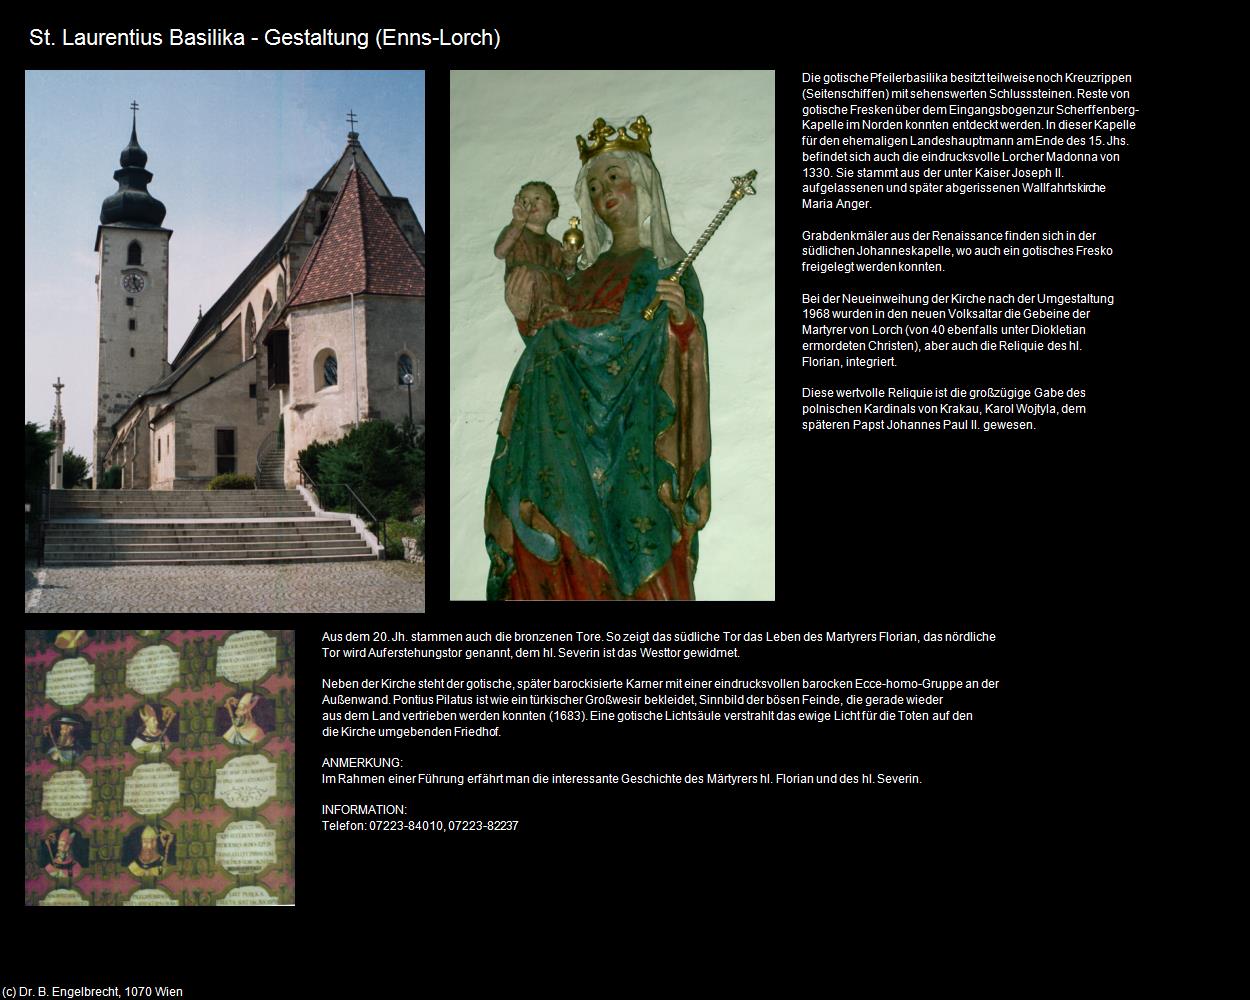 Basilika hl. Laurentius-Gestaltung (Lorch) (Enns) in Kulturatlas-OBERÖSTERREICH